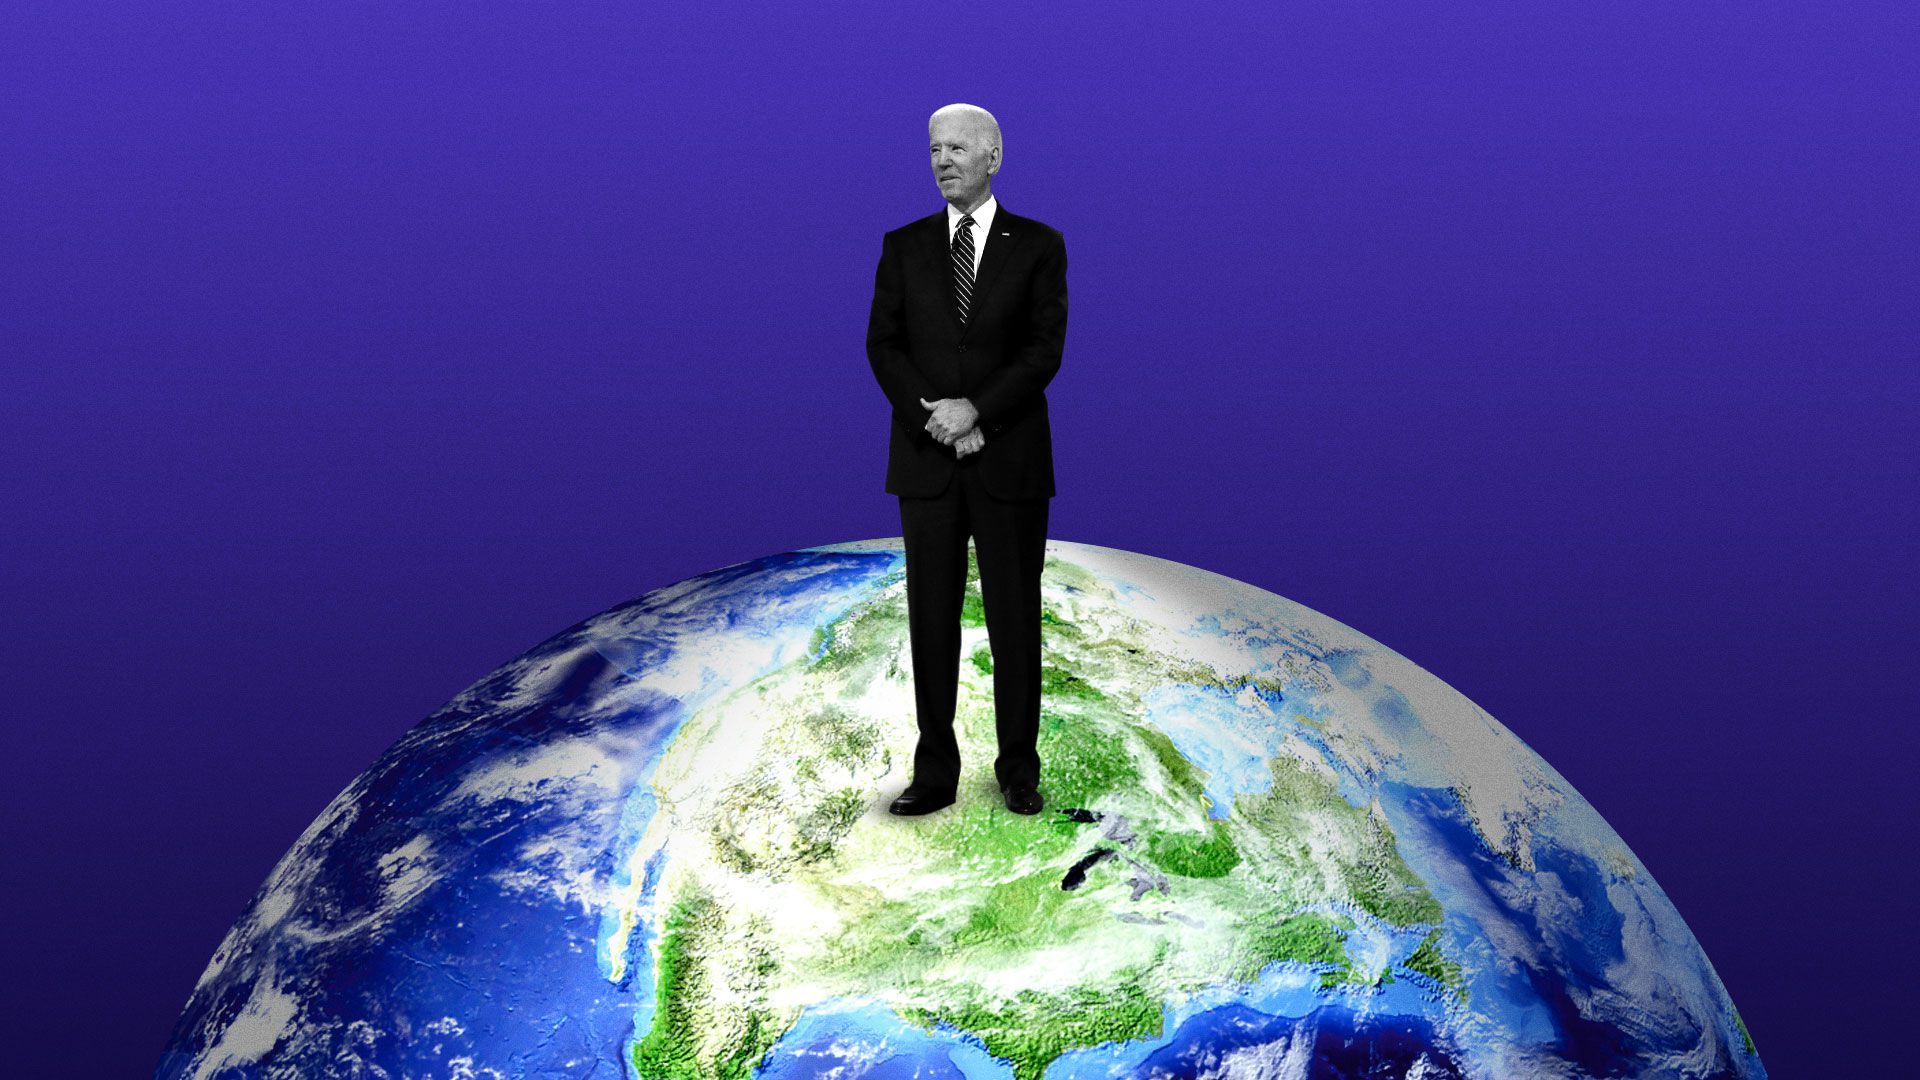 Illustration of Joseph Biden standing on a globe